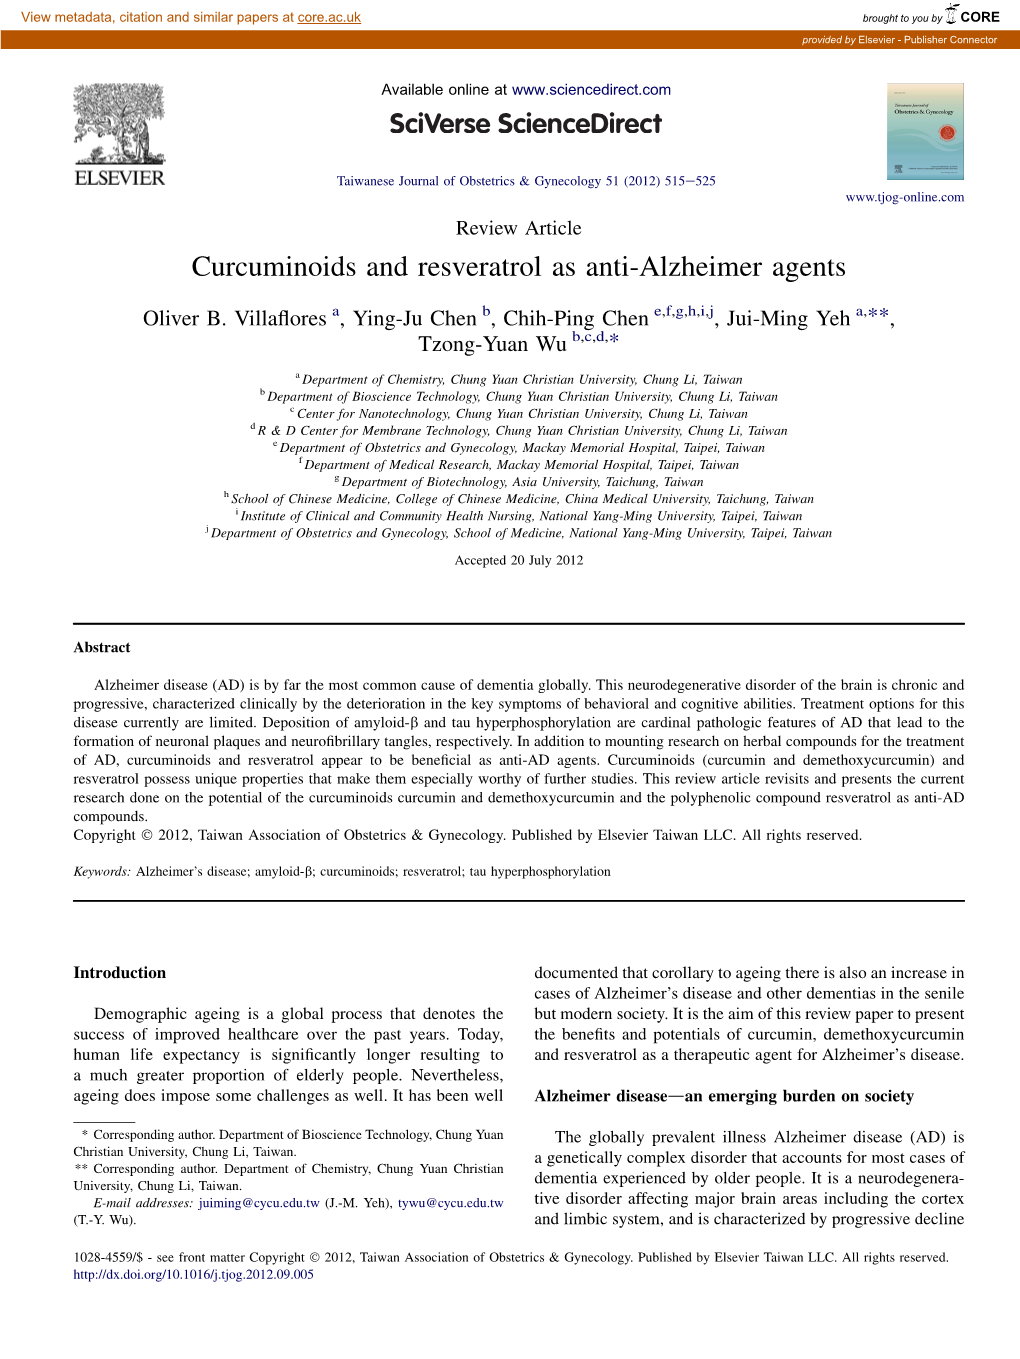 Curcuminoids and Resveratrol As Anti-Alzheimer Agents